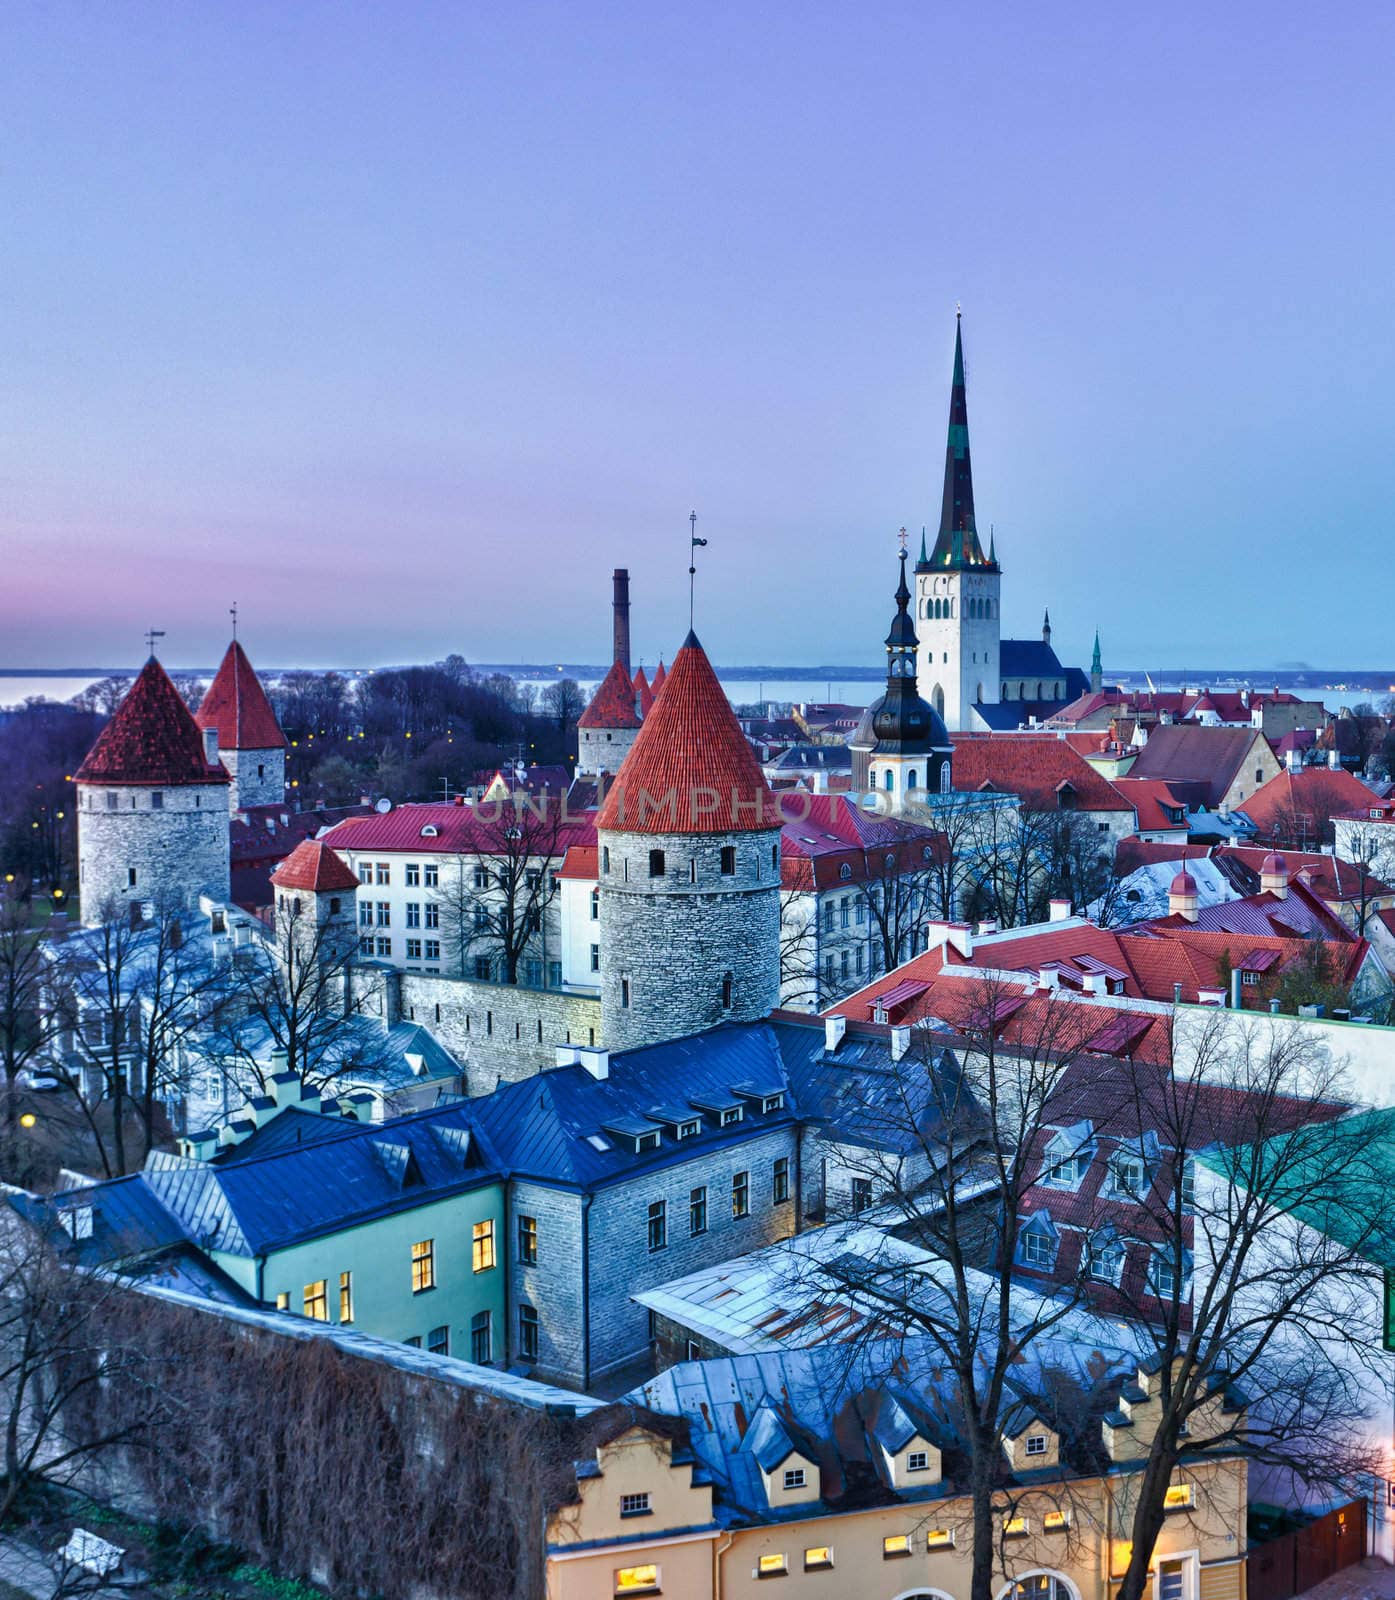 Old town of Tallinn Estonia by steheap